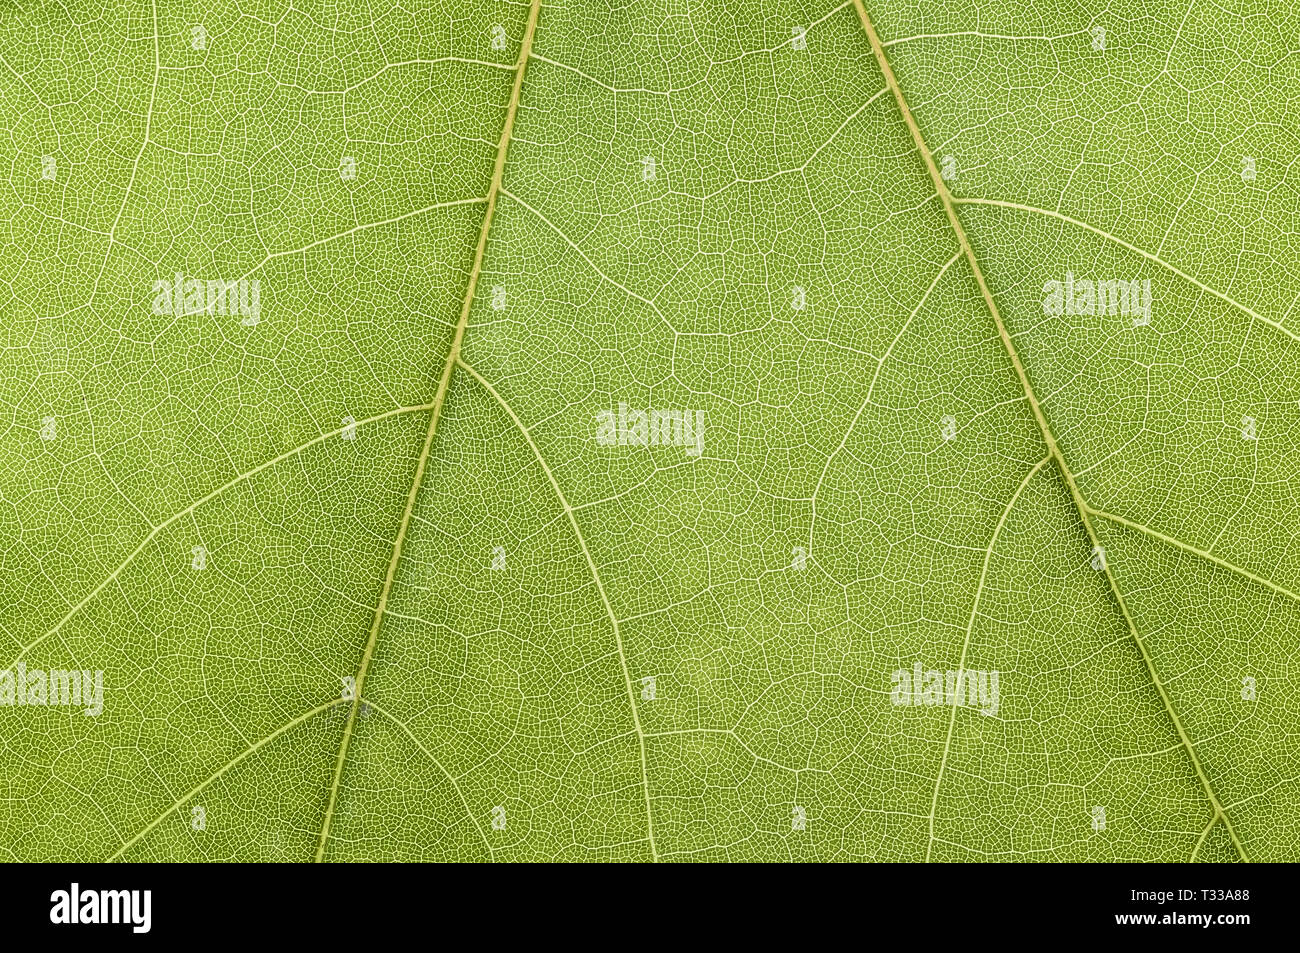 High detaled green leaf macro texture or background Stock Photo